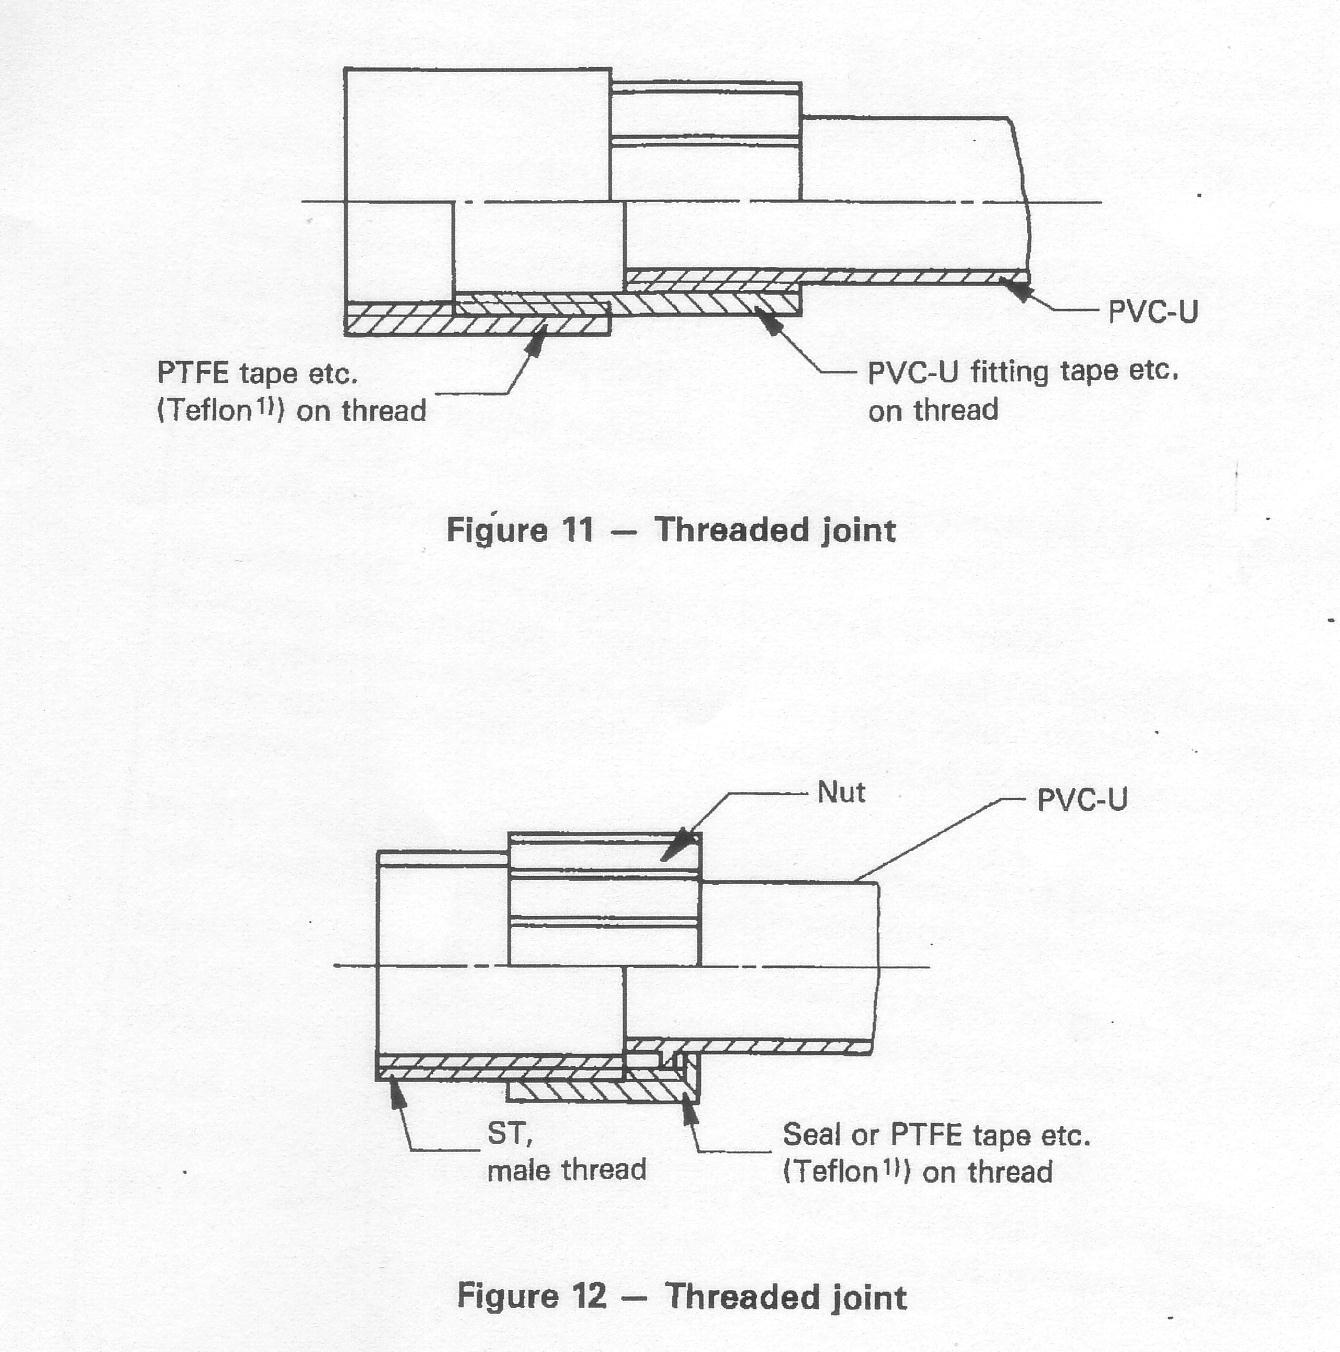 Figure 12: Threaded joint